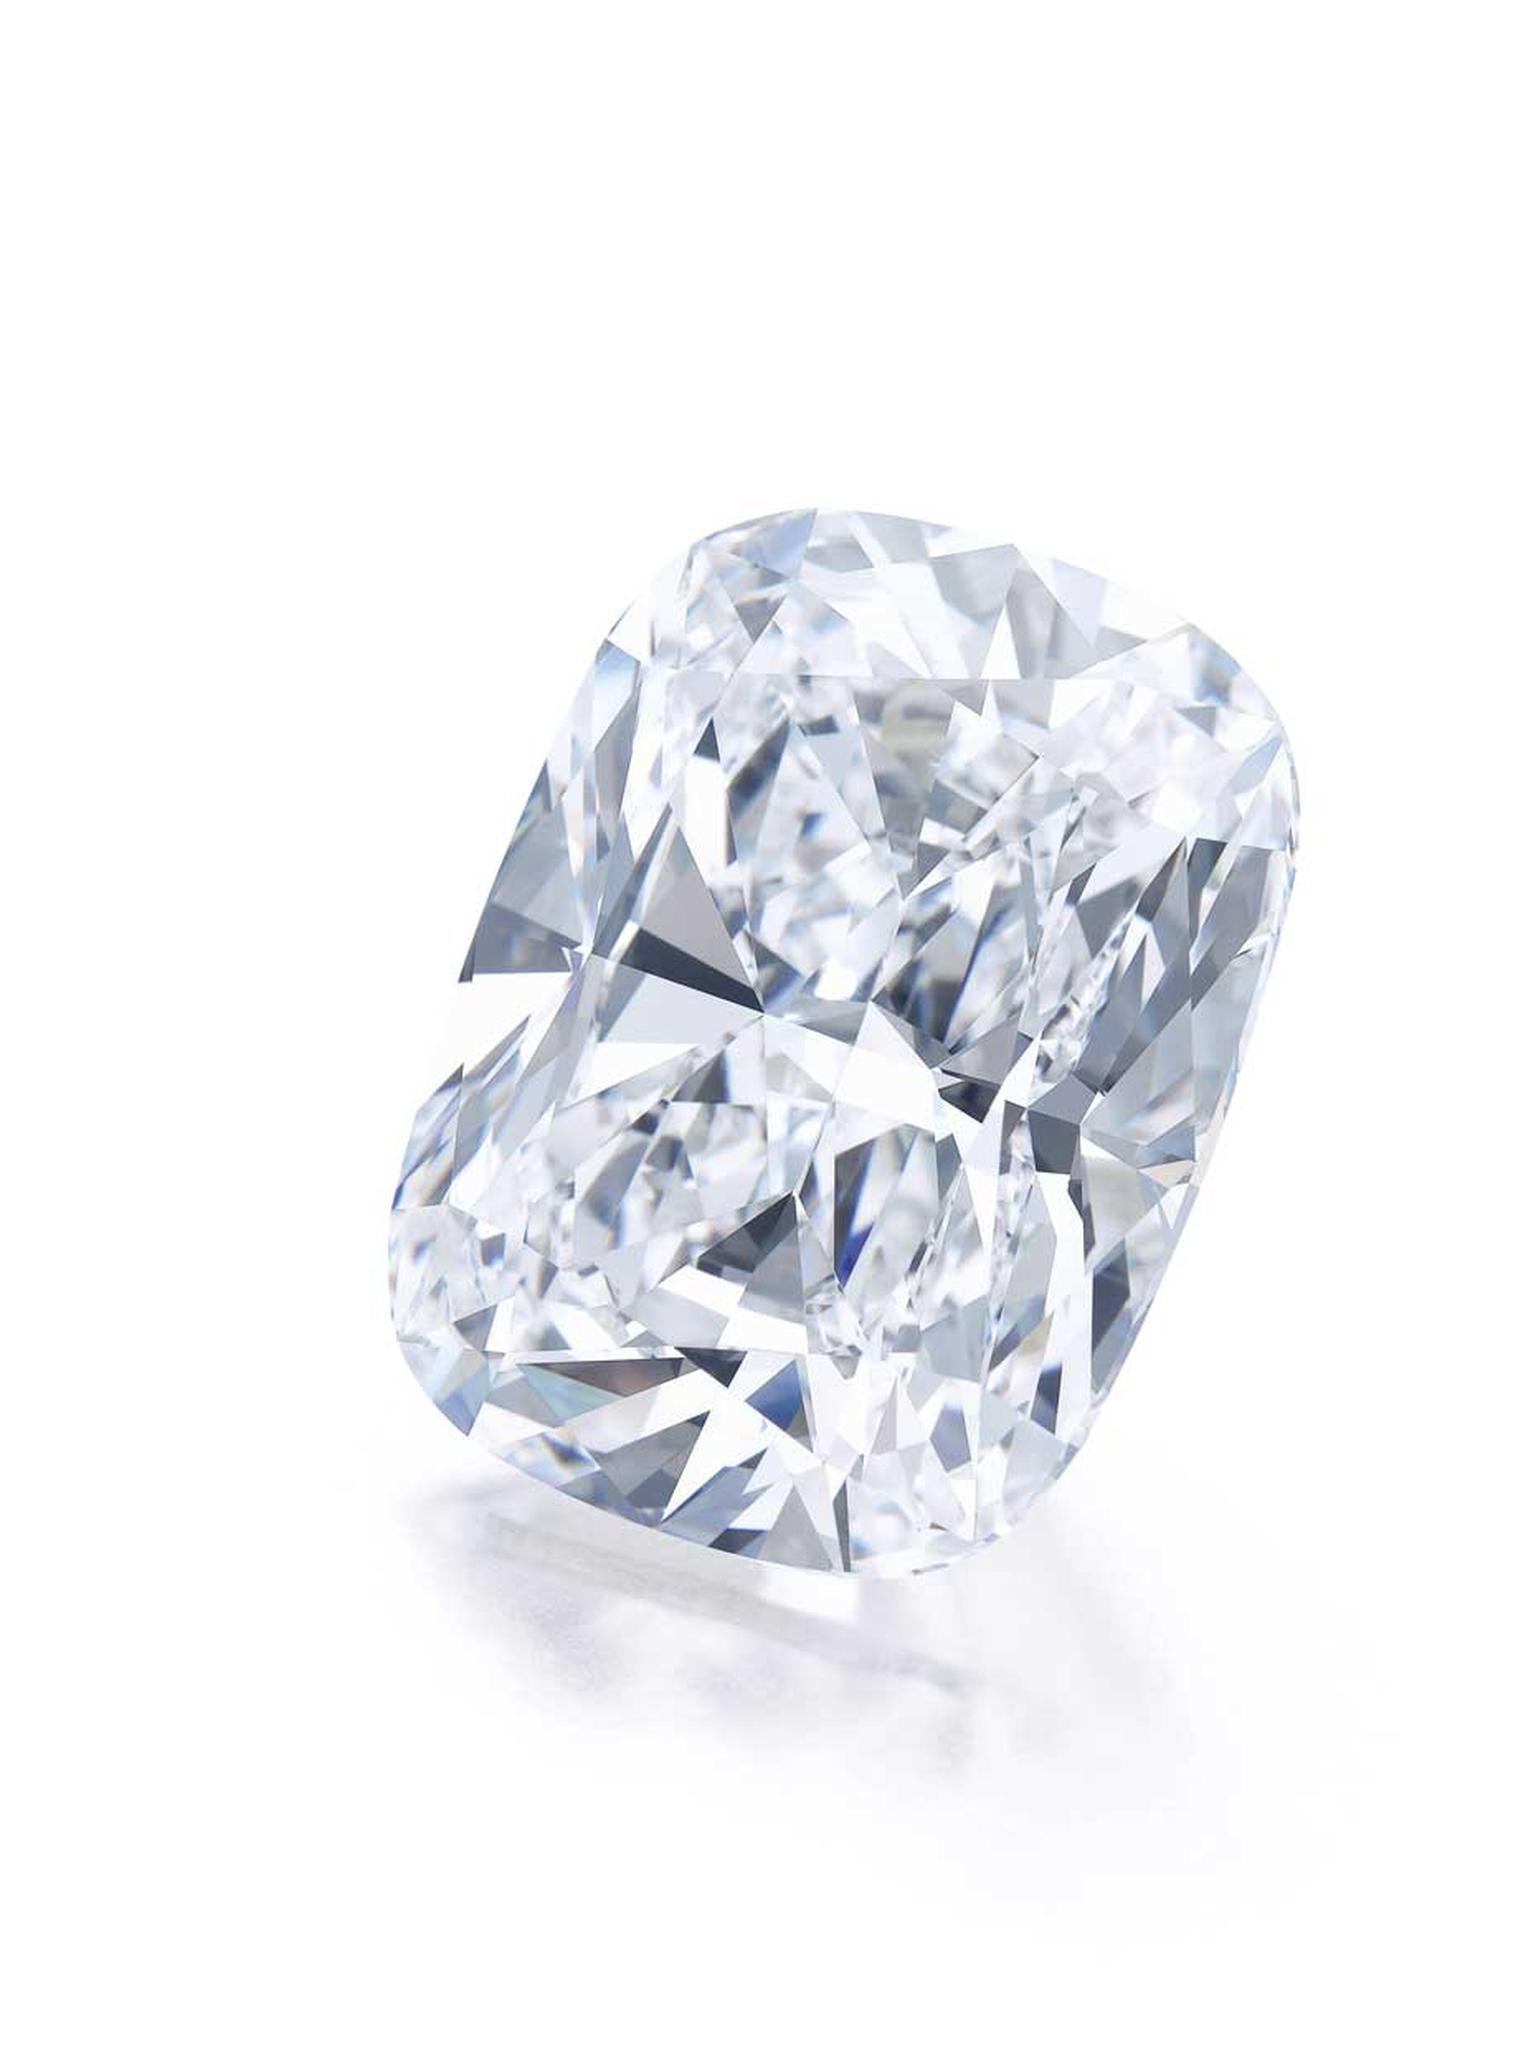 A 70.33ct cushion brilliant-cut diamond. Sold for CHF 12,597,000 (estimate: CHF 10,700,000-14,300,000)